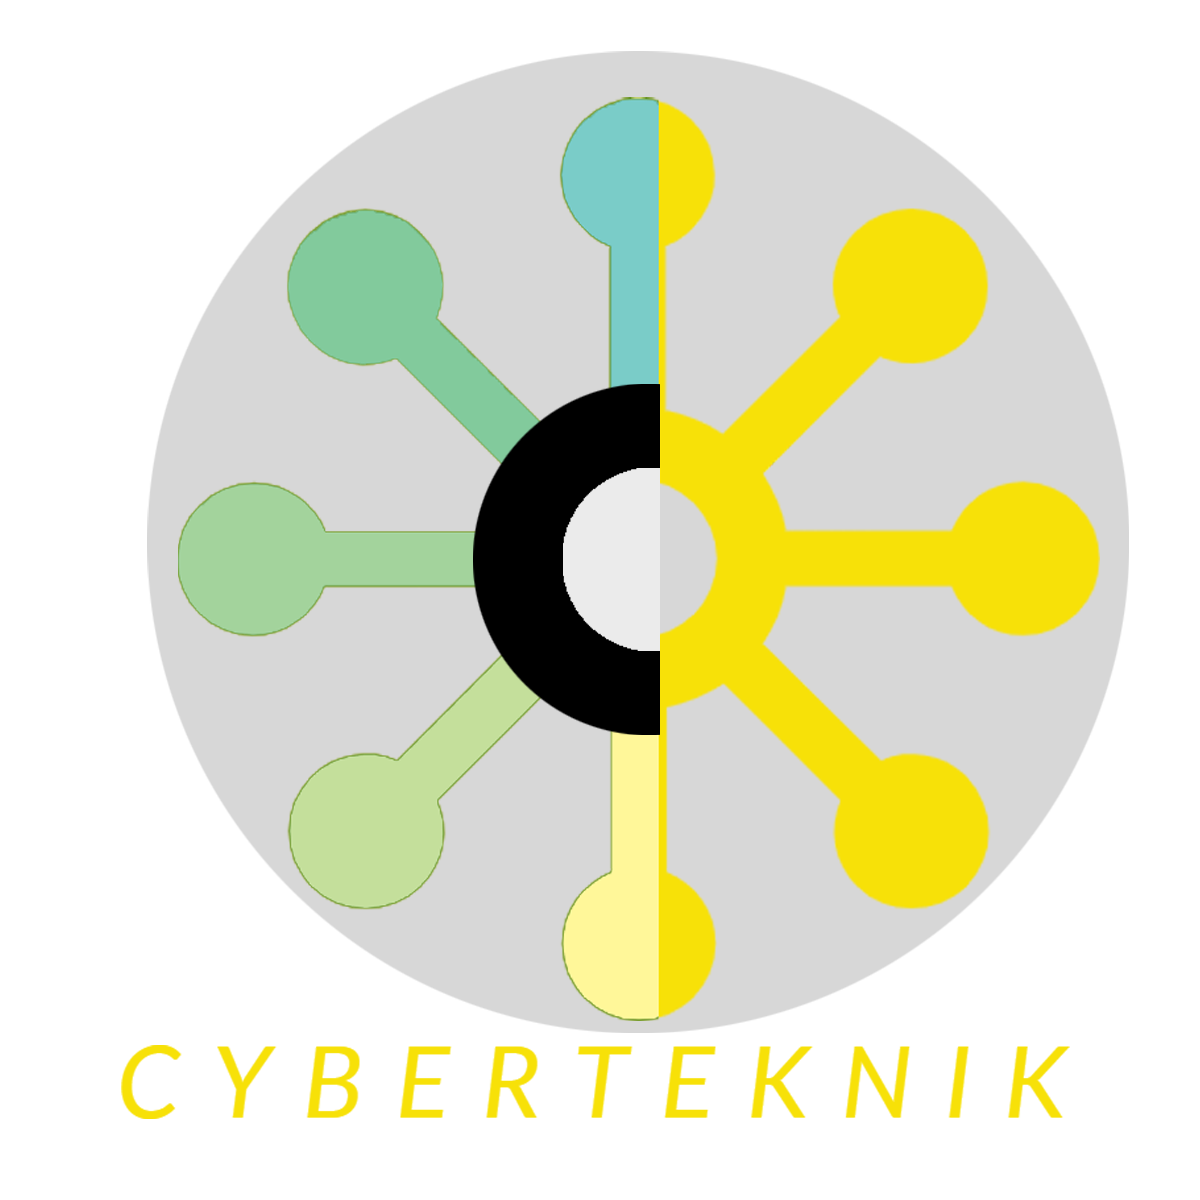 CyberTeknik